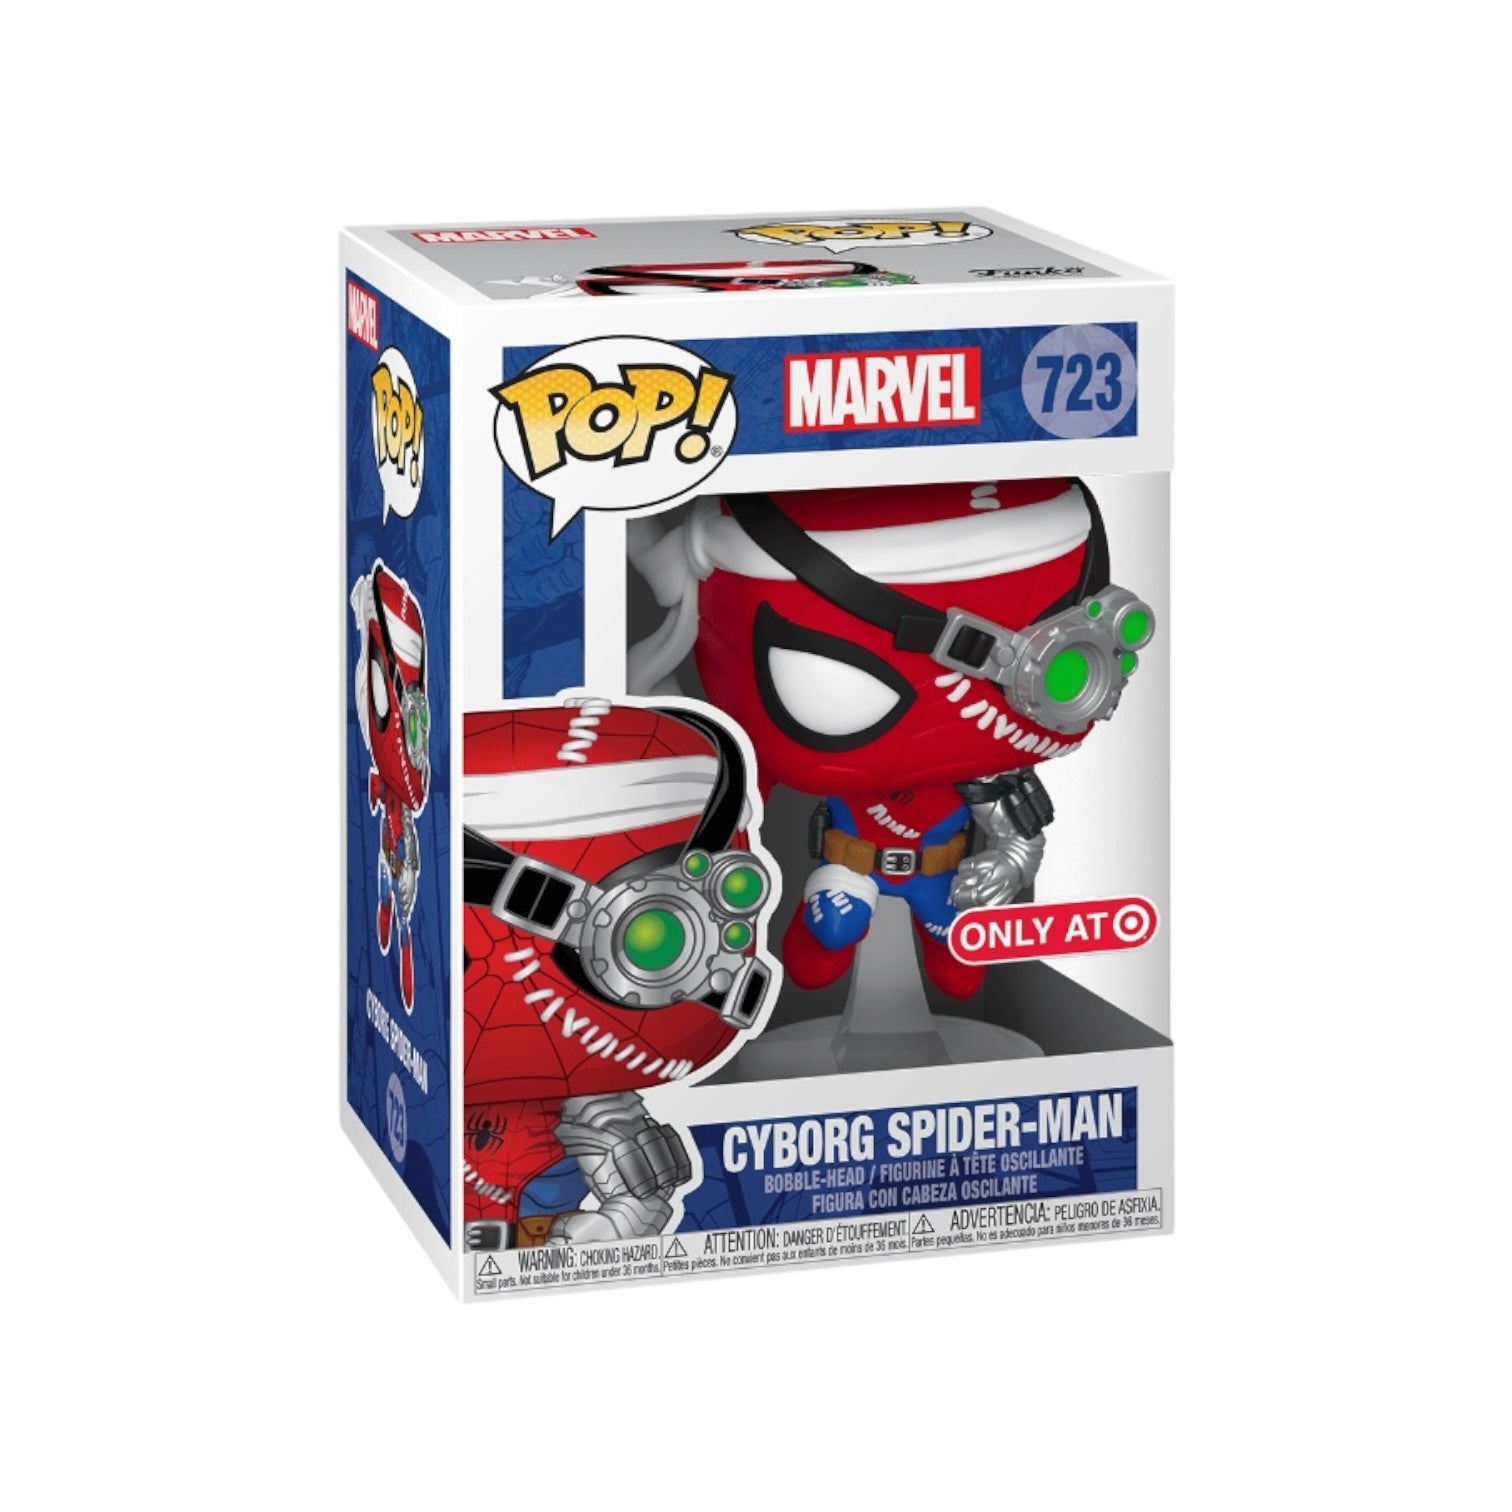 Cyborg Spider-man #723 Funko Pop! - Marvel - Only at Target